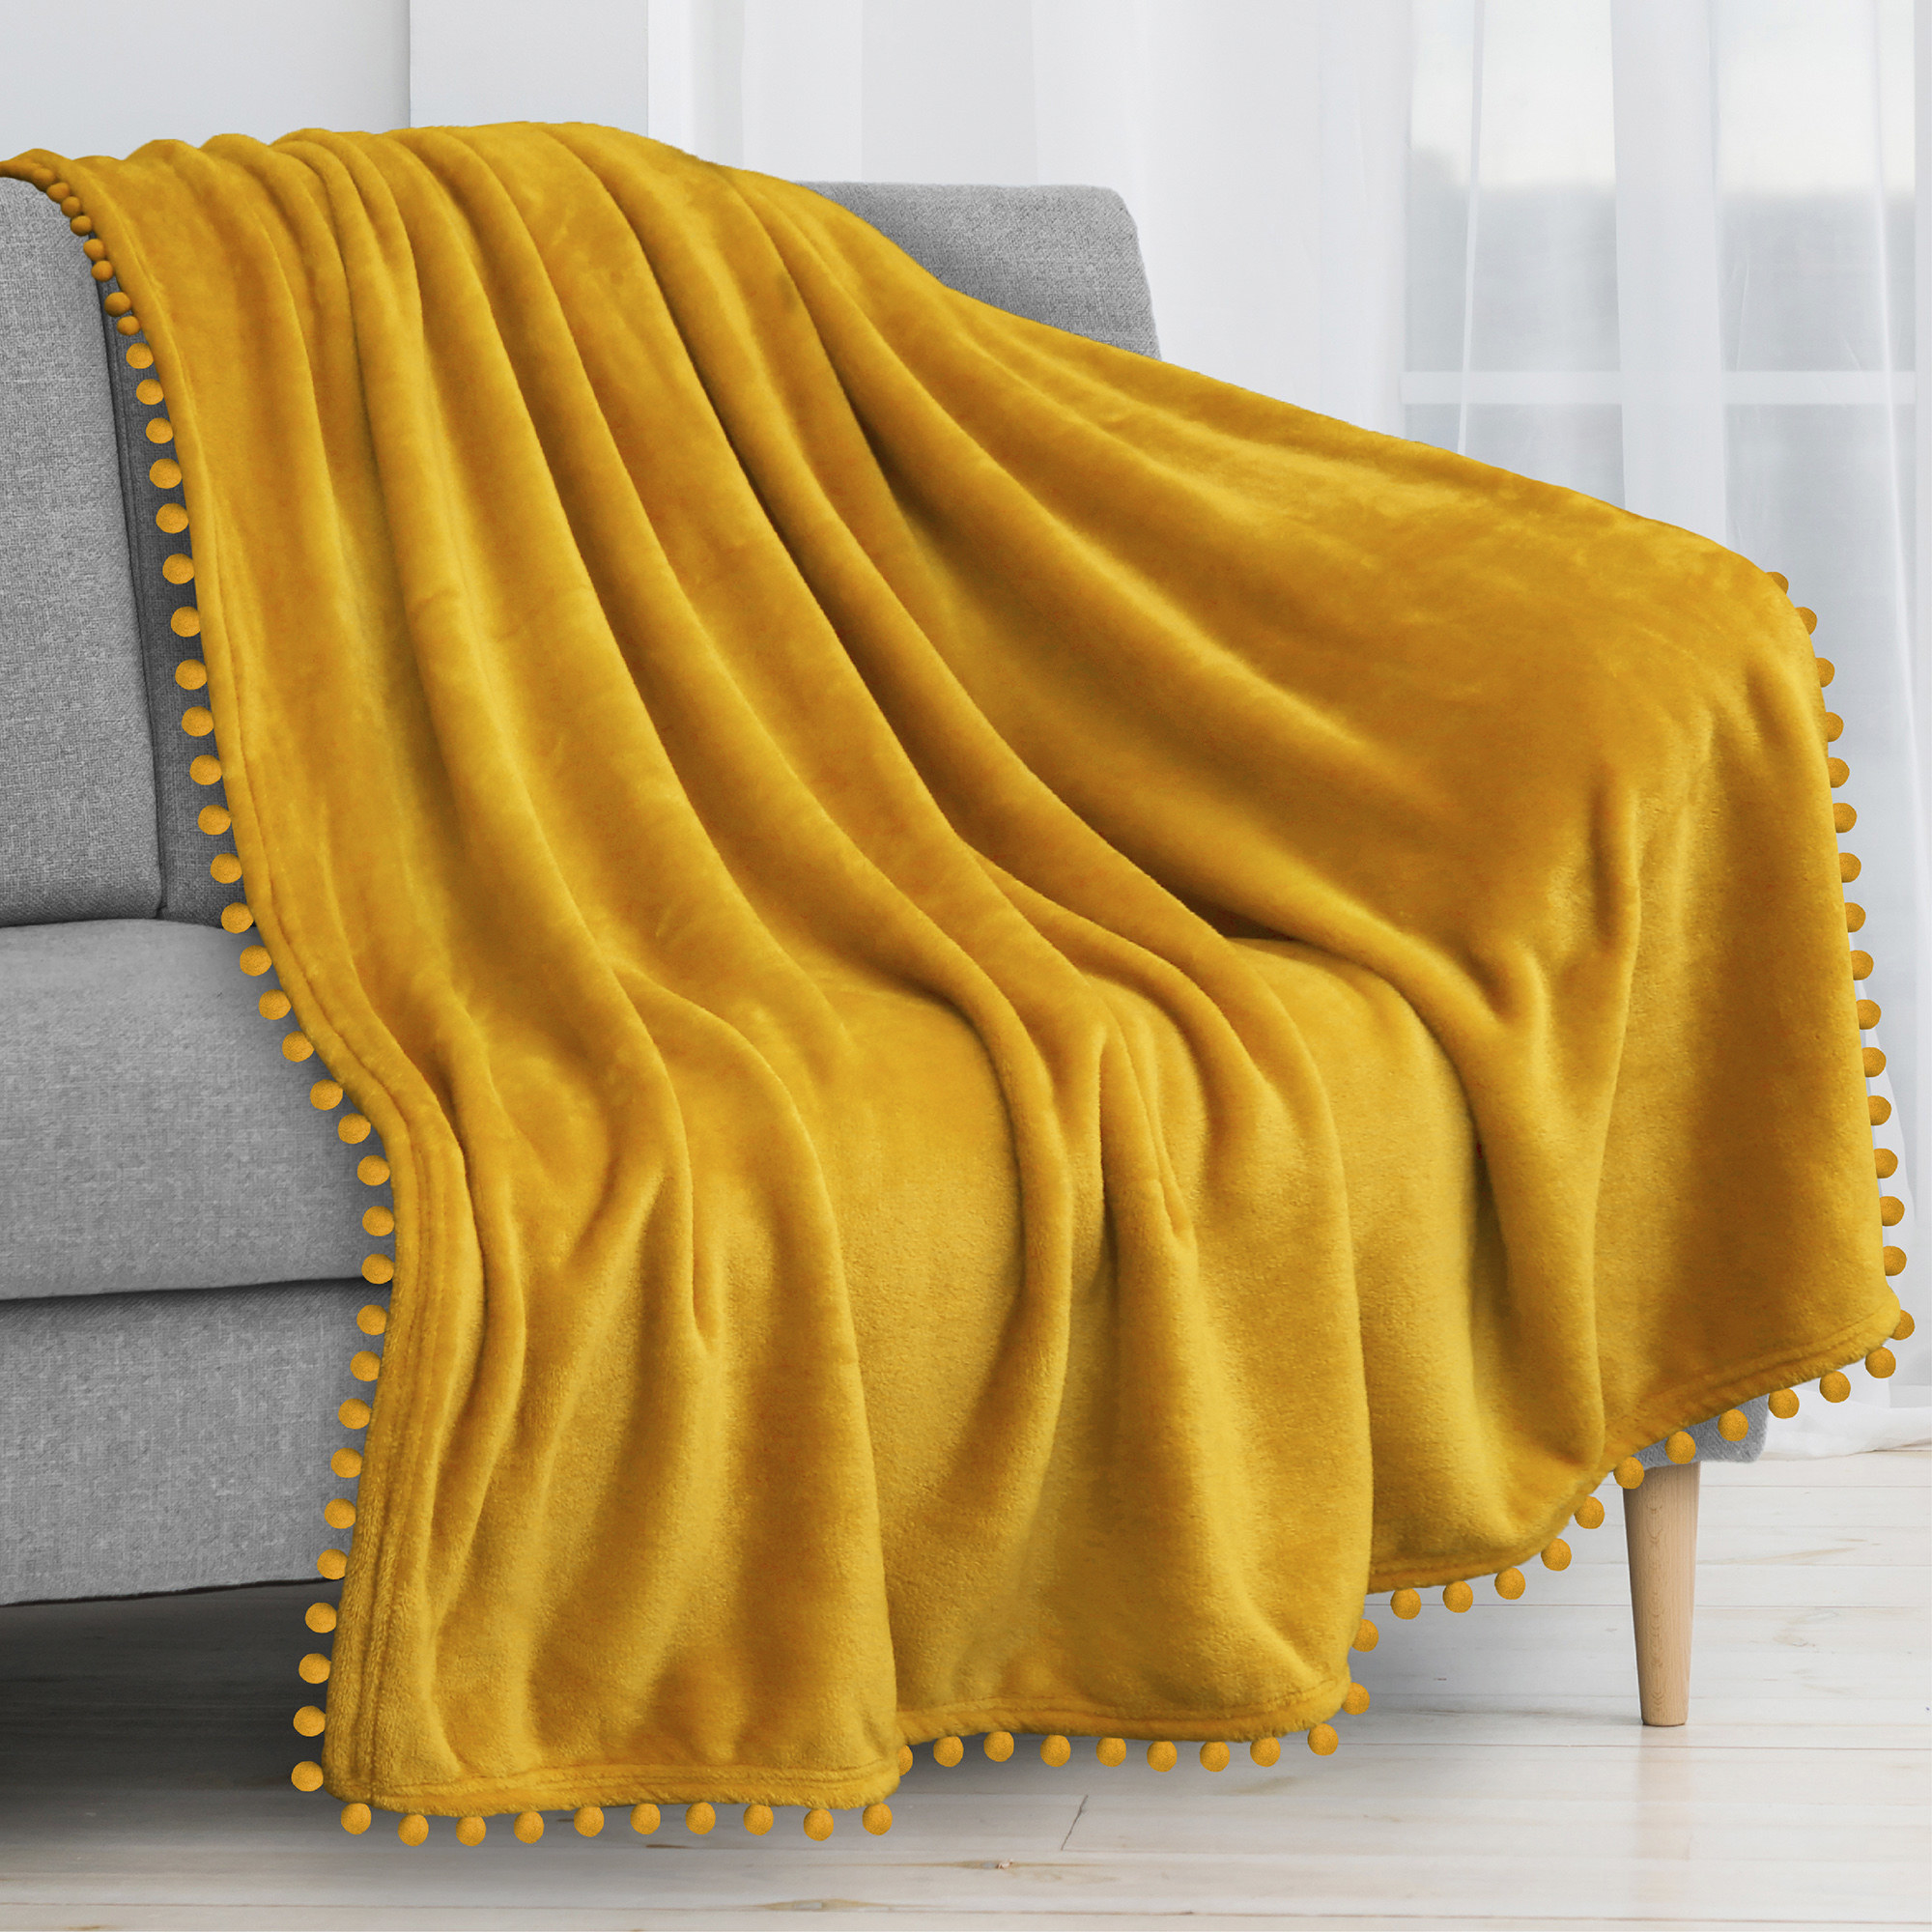 the blanket in mustard